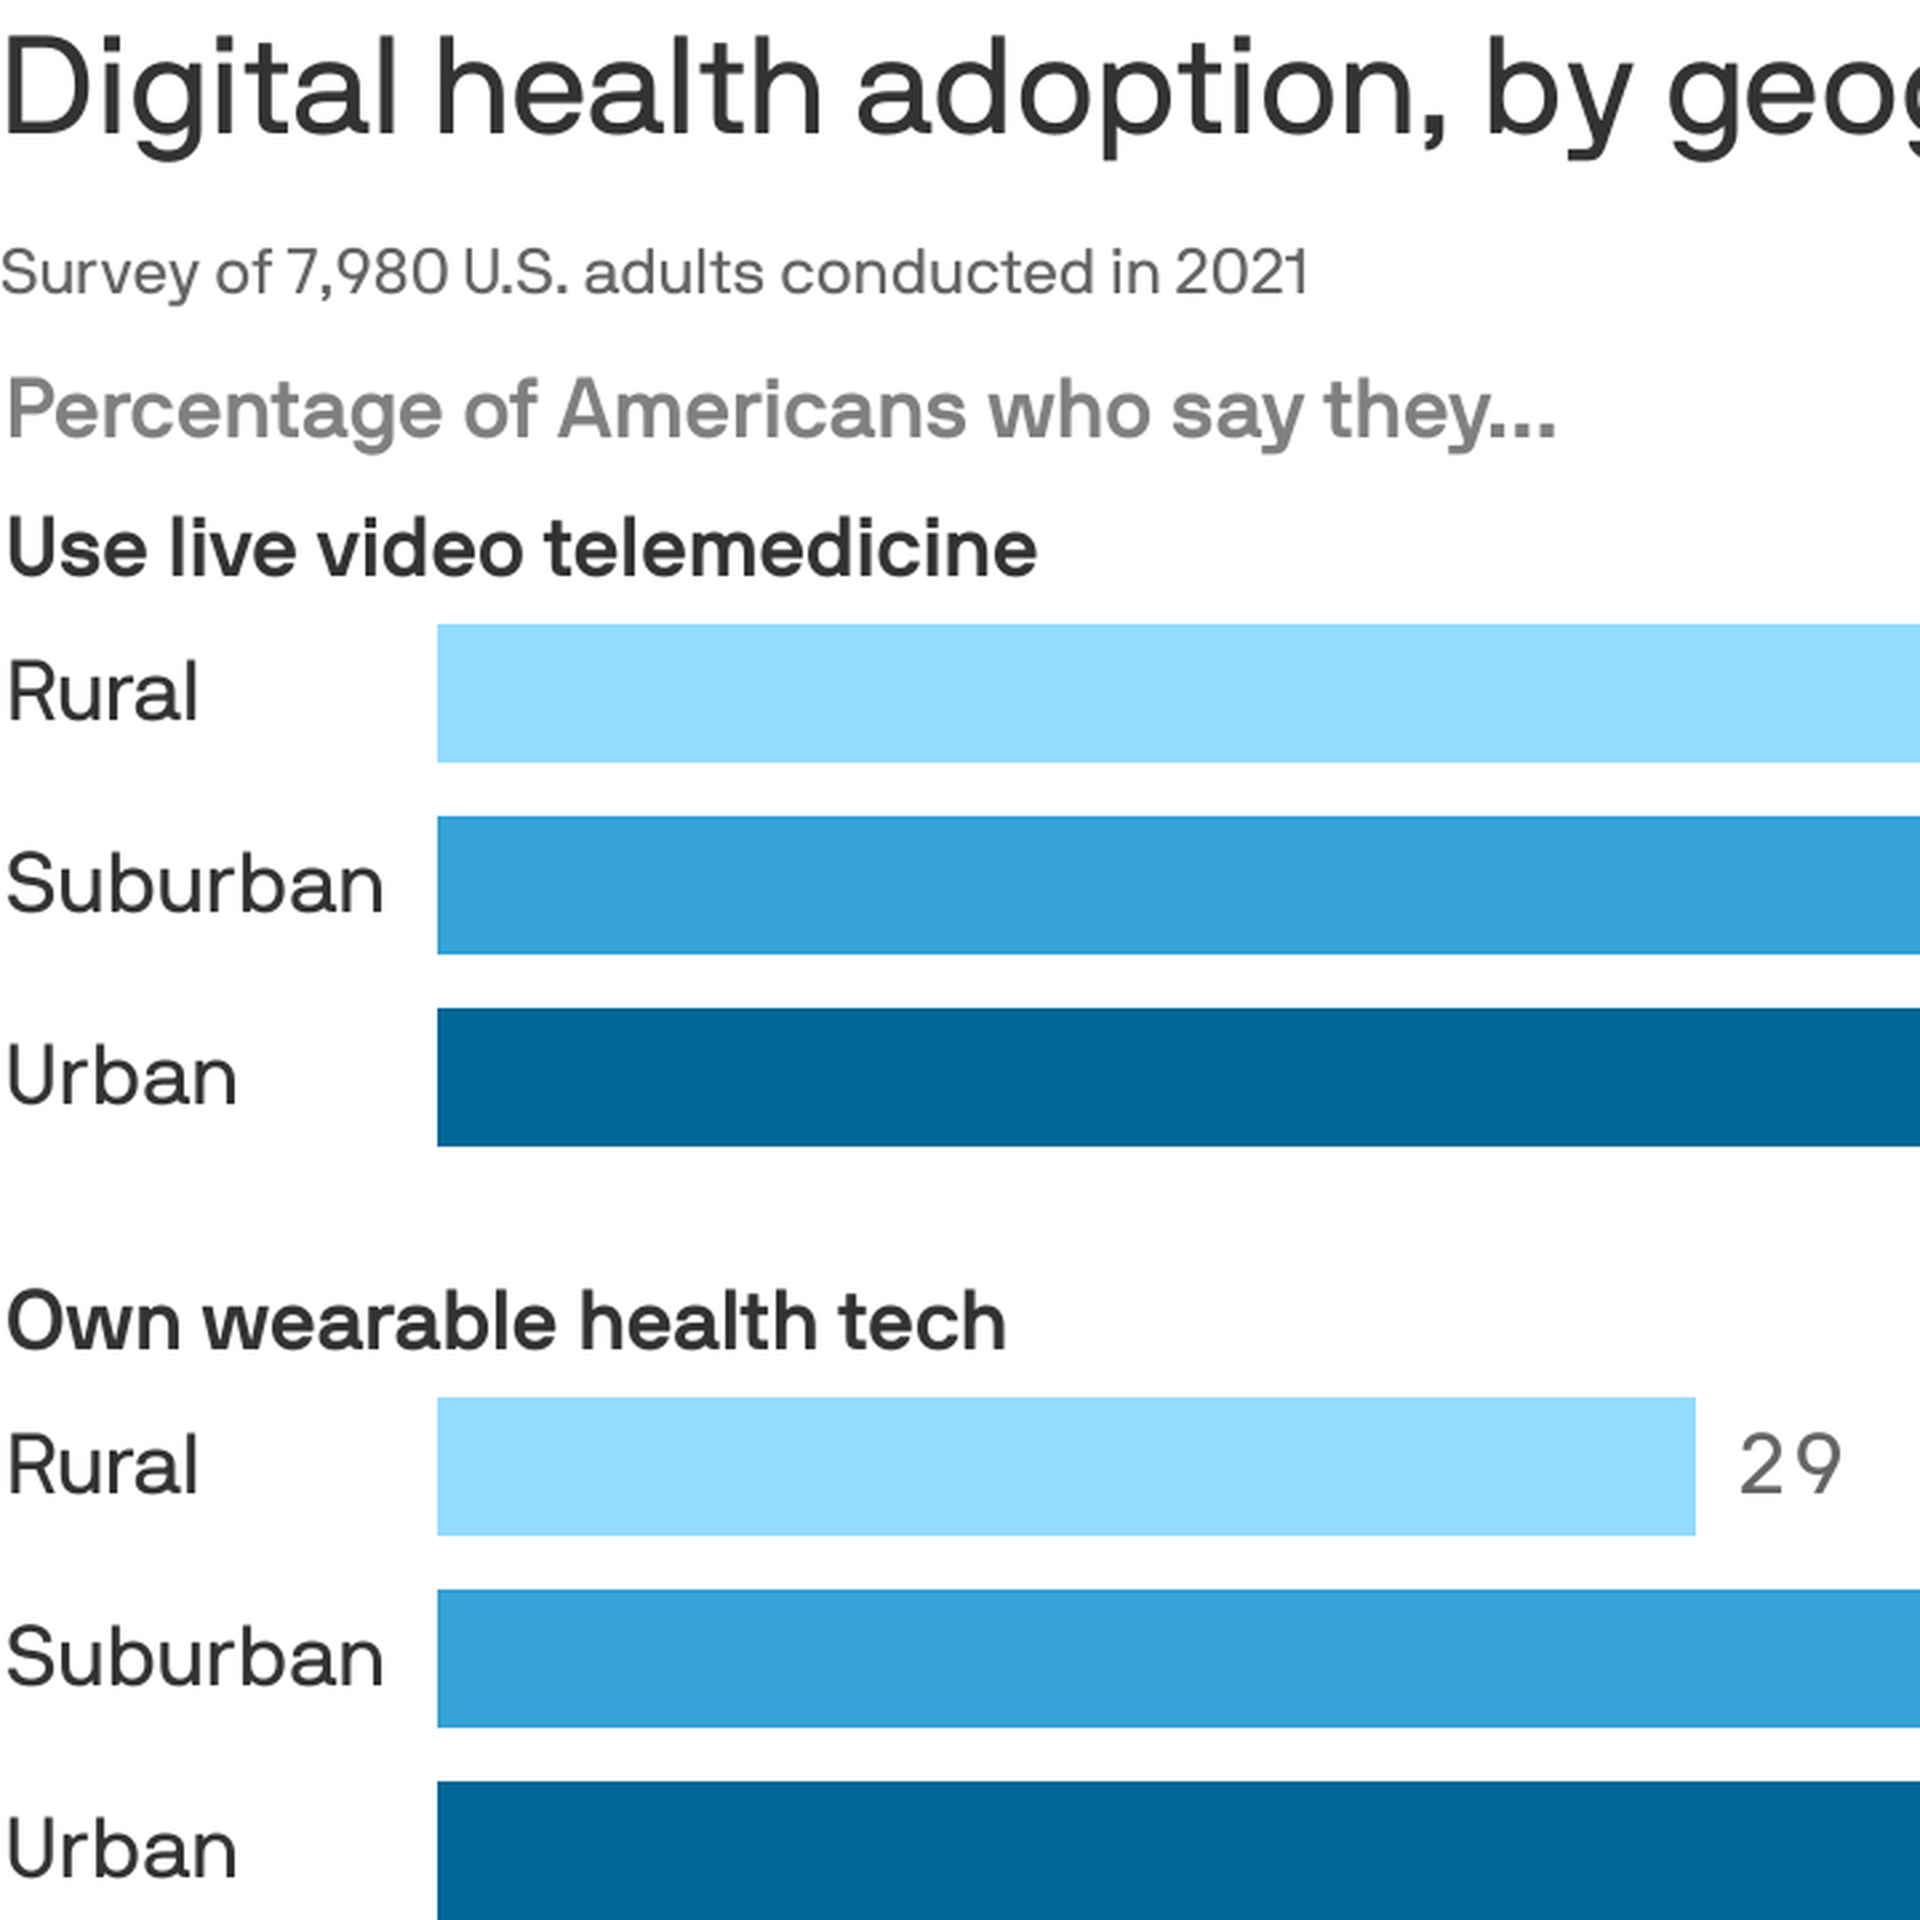 Bar chart showing digital health adoption discrepancies between urban and rural residents.